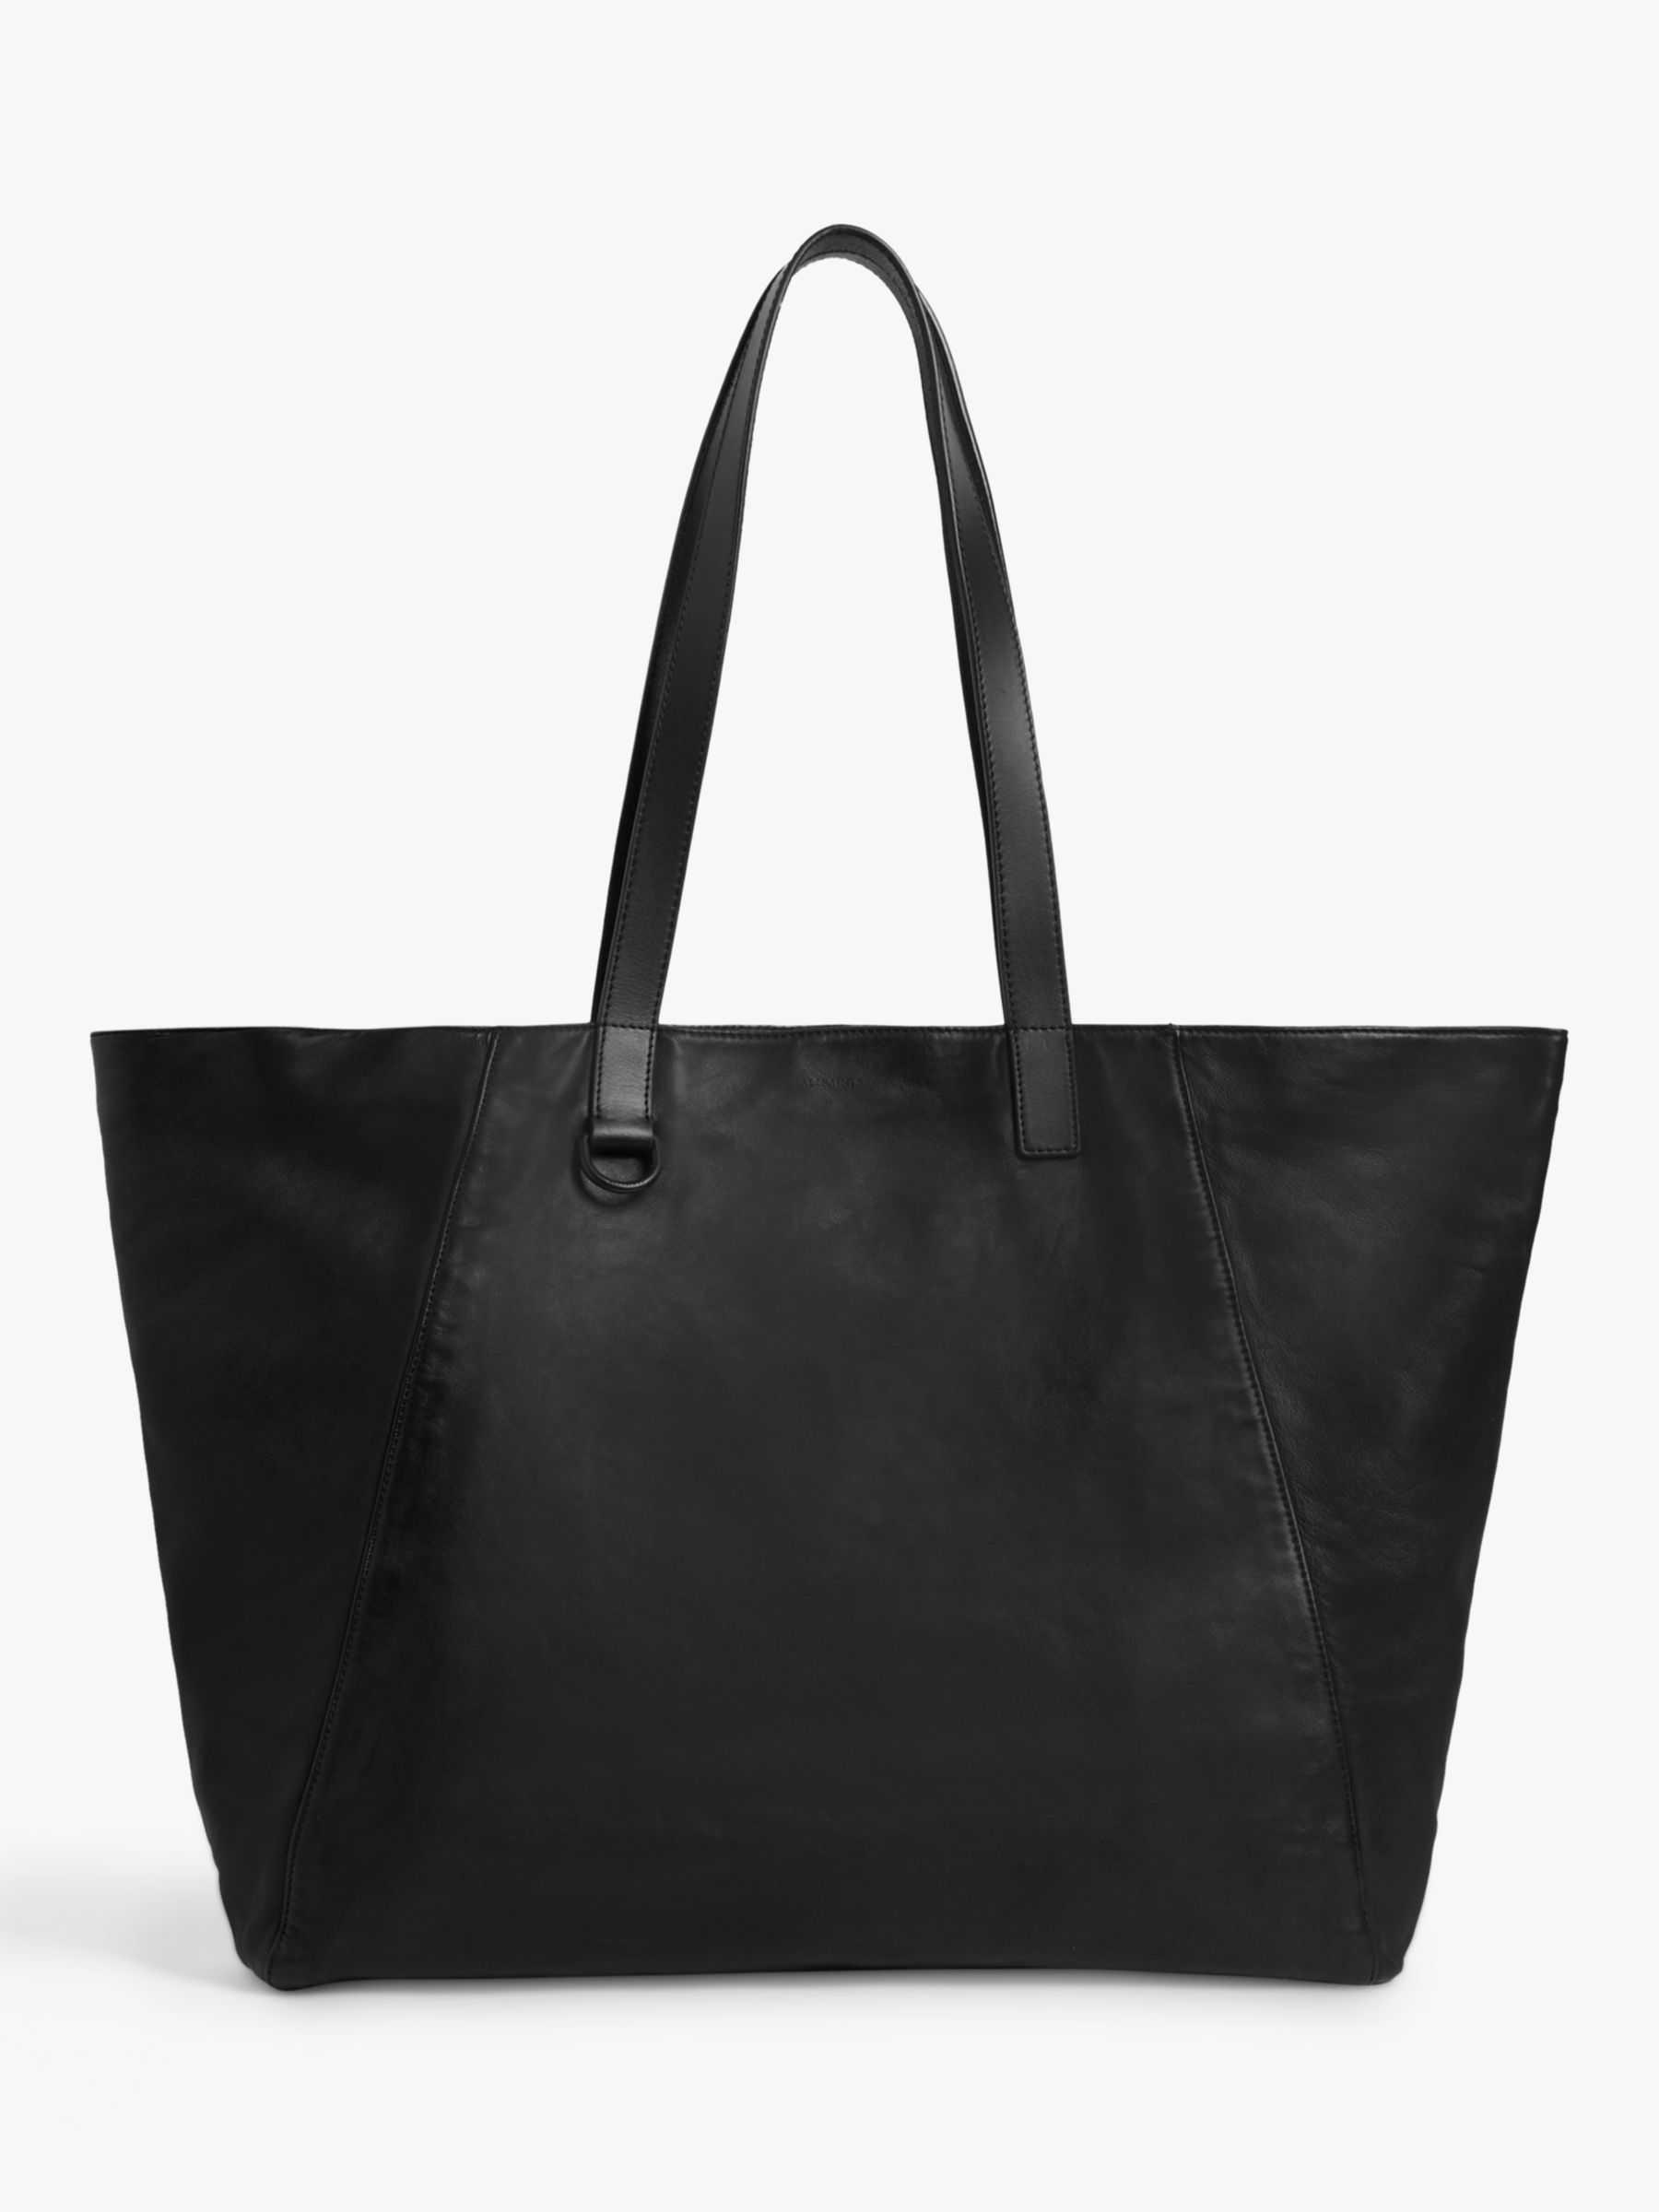 AllSaints Cutler Leather Tote Bag, Black at John Lewis & Partners